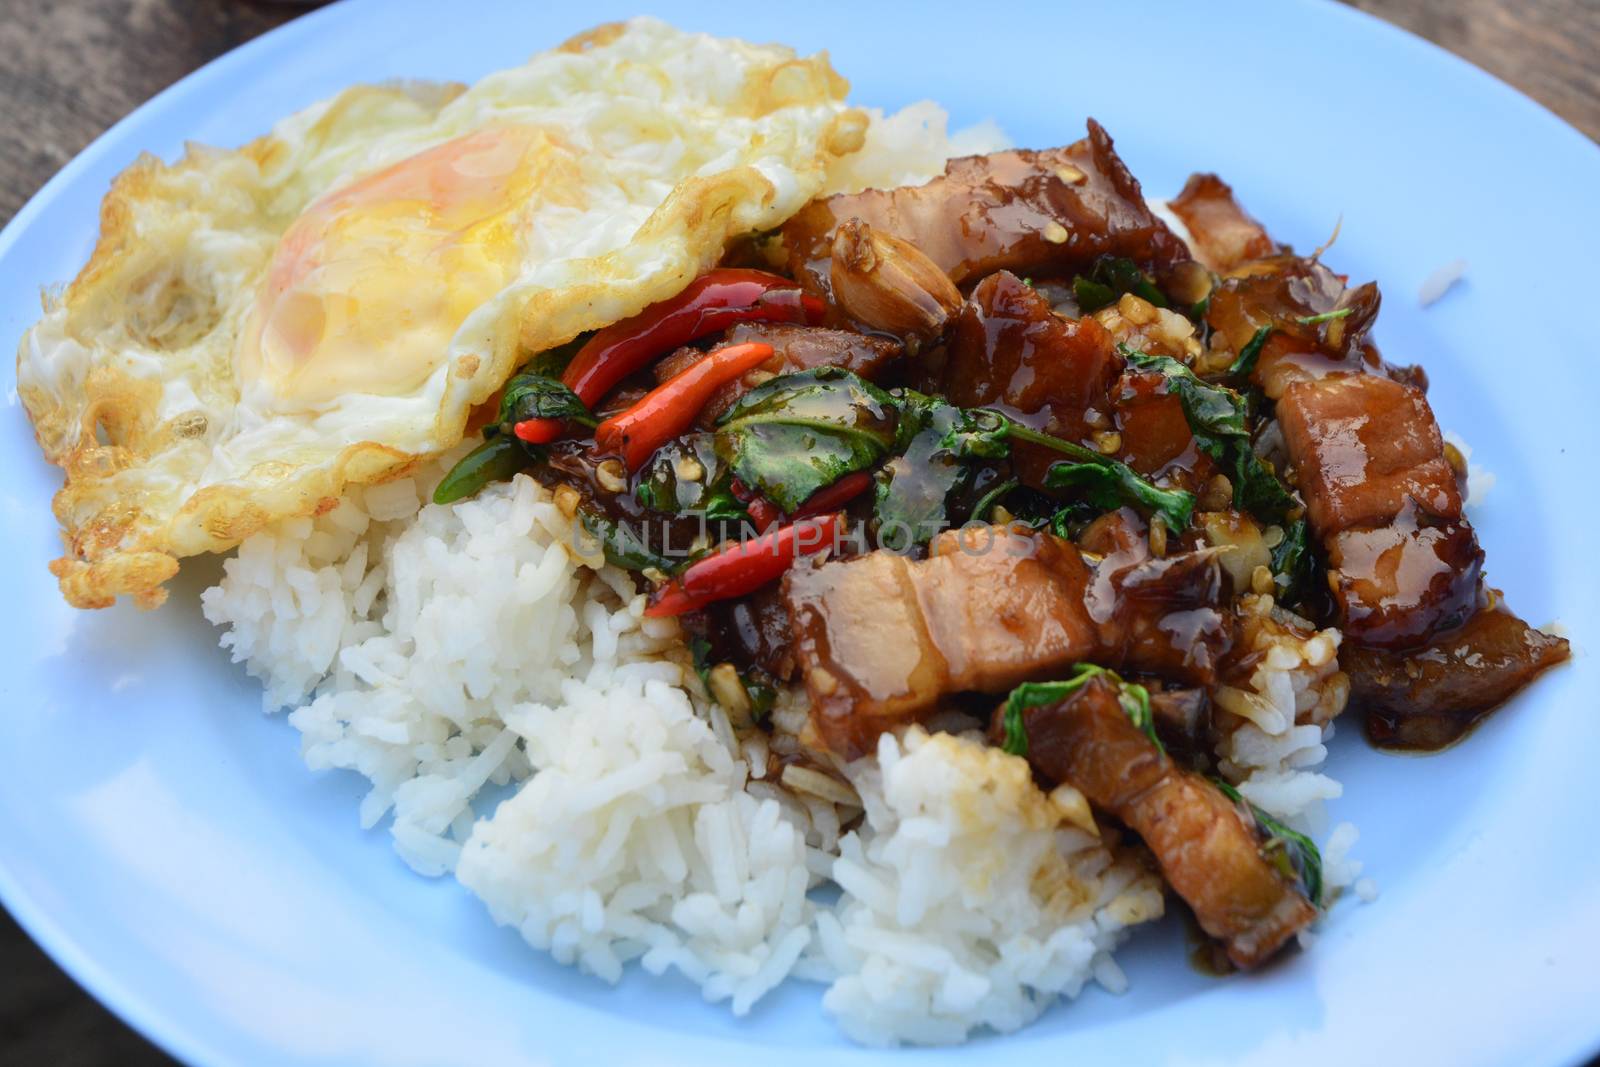 Thai Food Fried Basil With Crispy Pork by ideation90